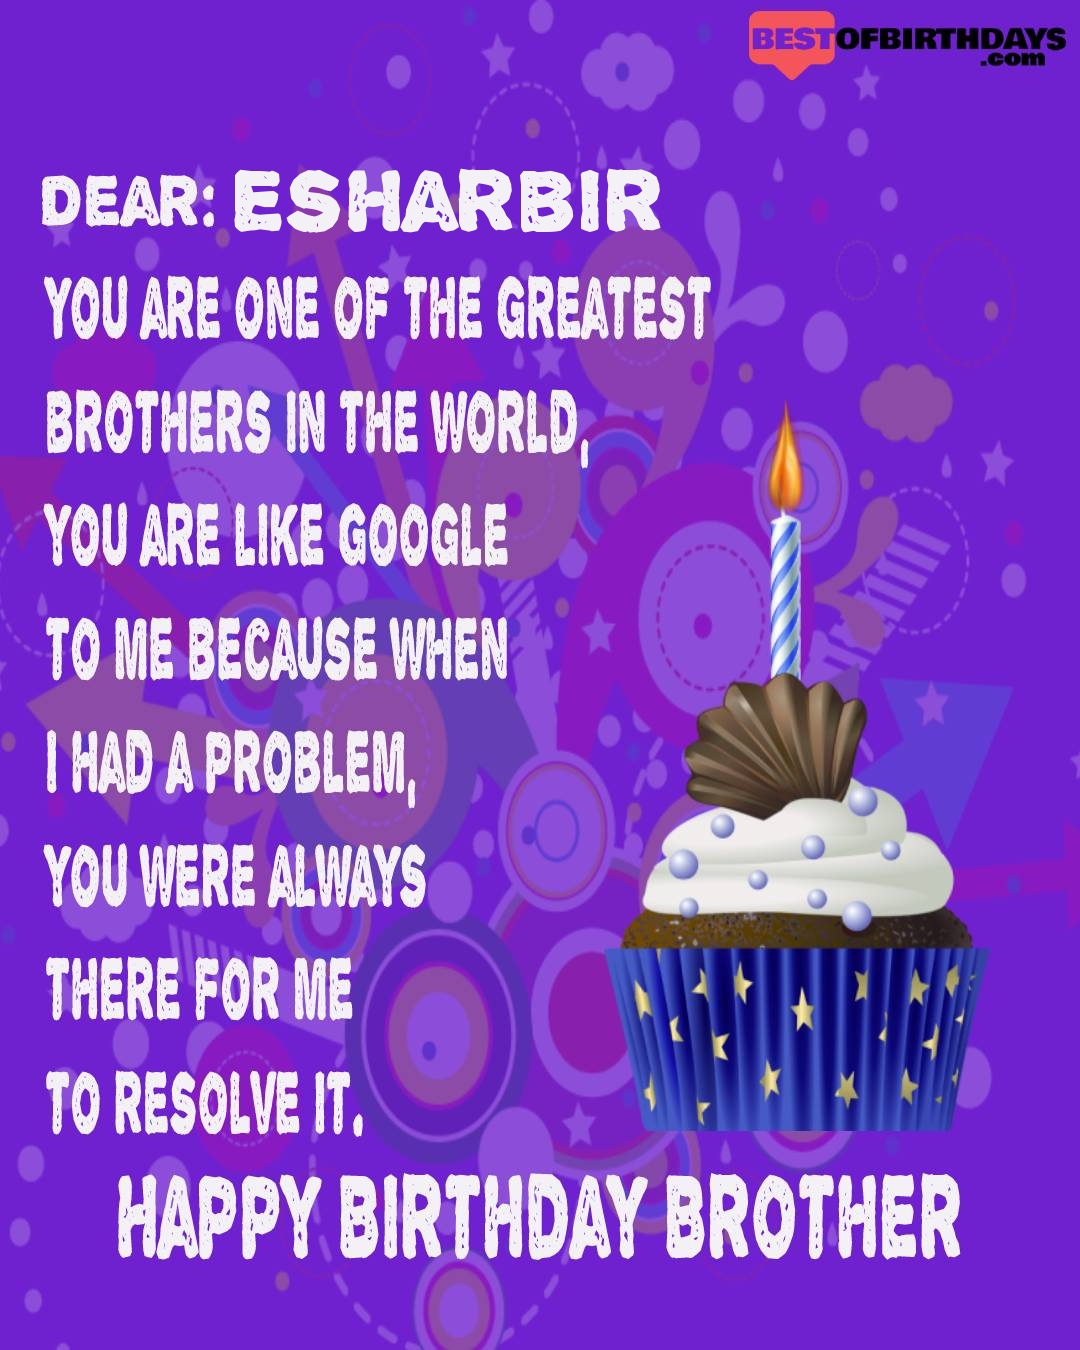 Happy birthday esharbir bhai brother bro